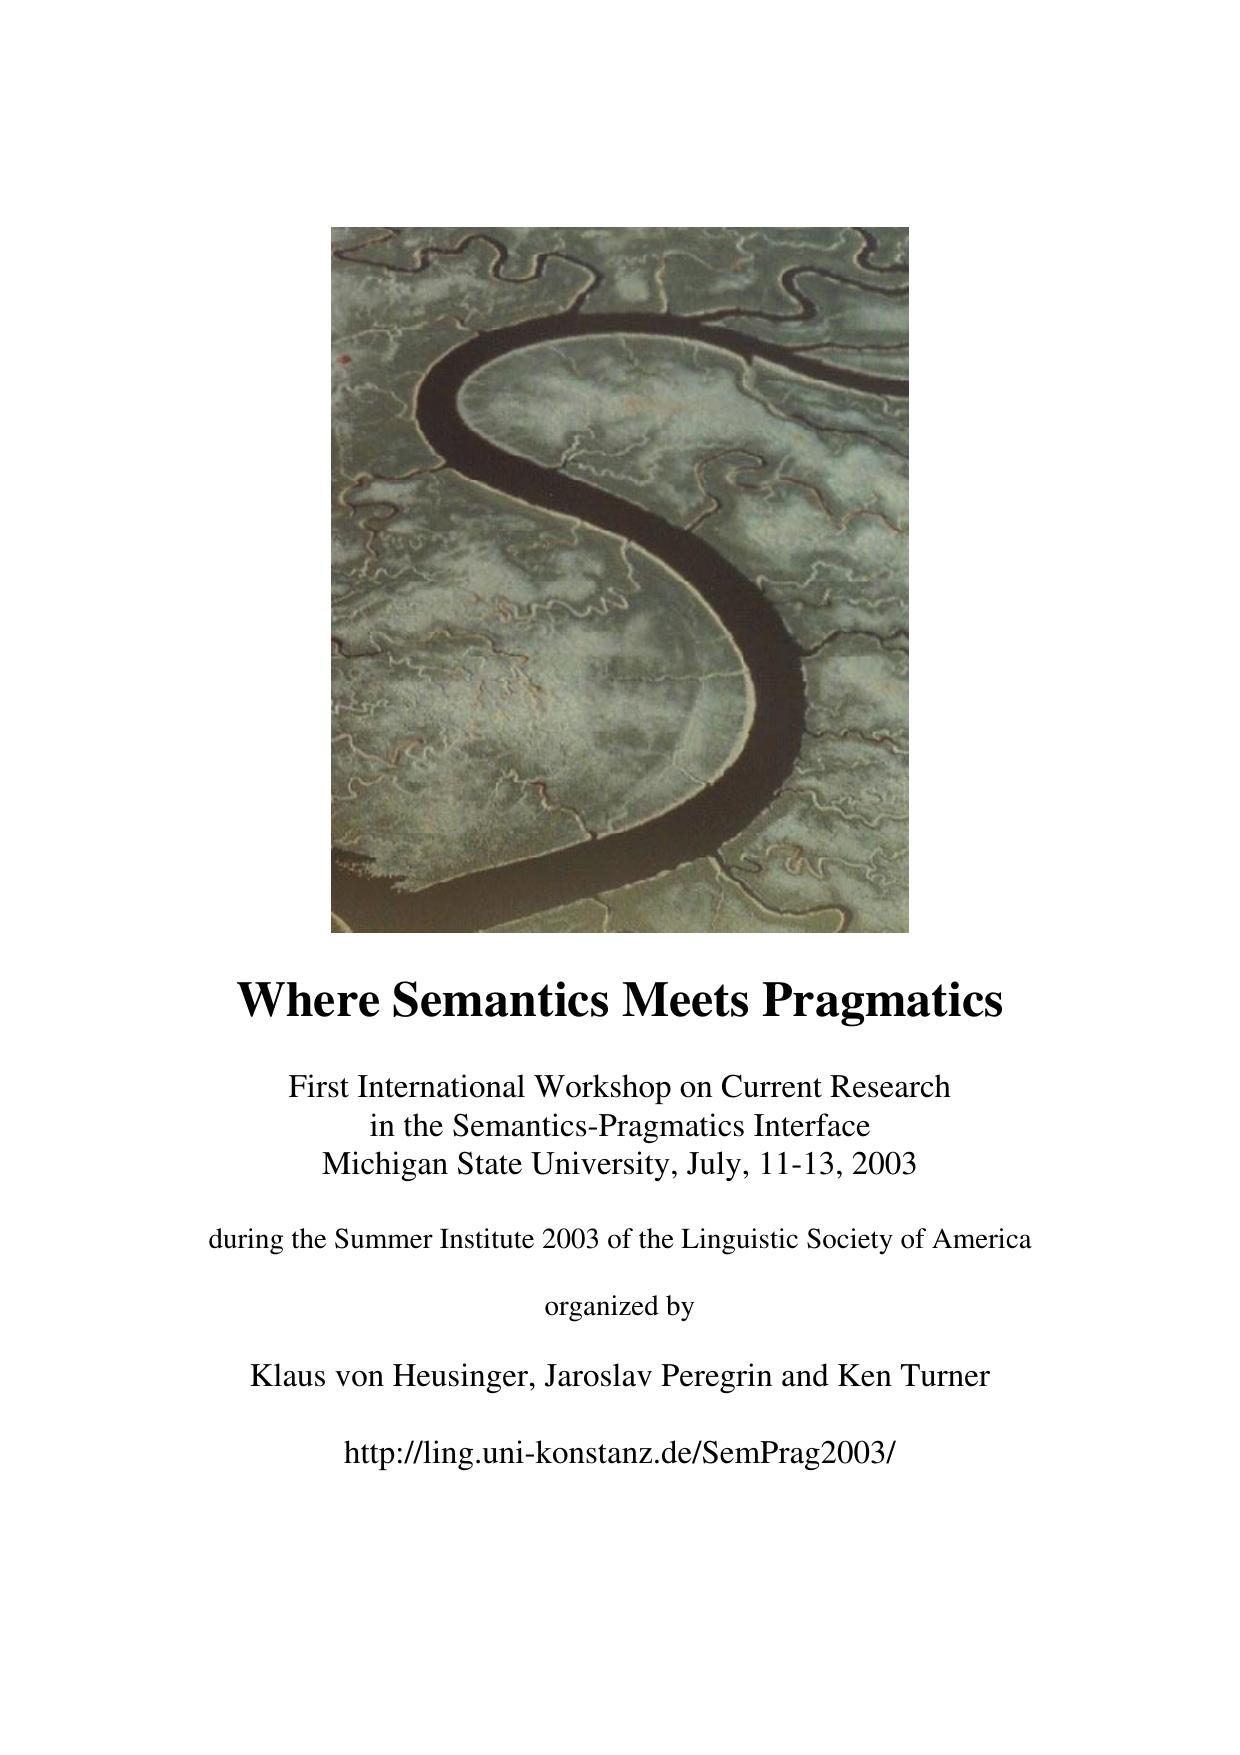 Where Semantics Meets Pragmatics 2003 Meeting papers